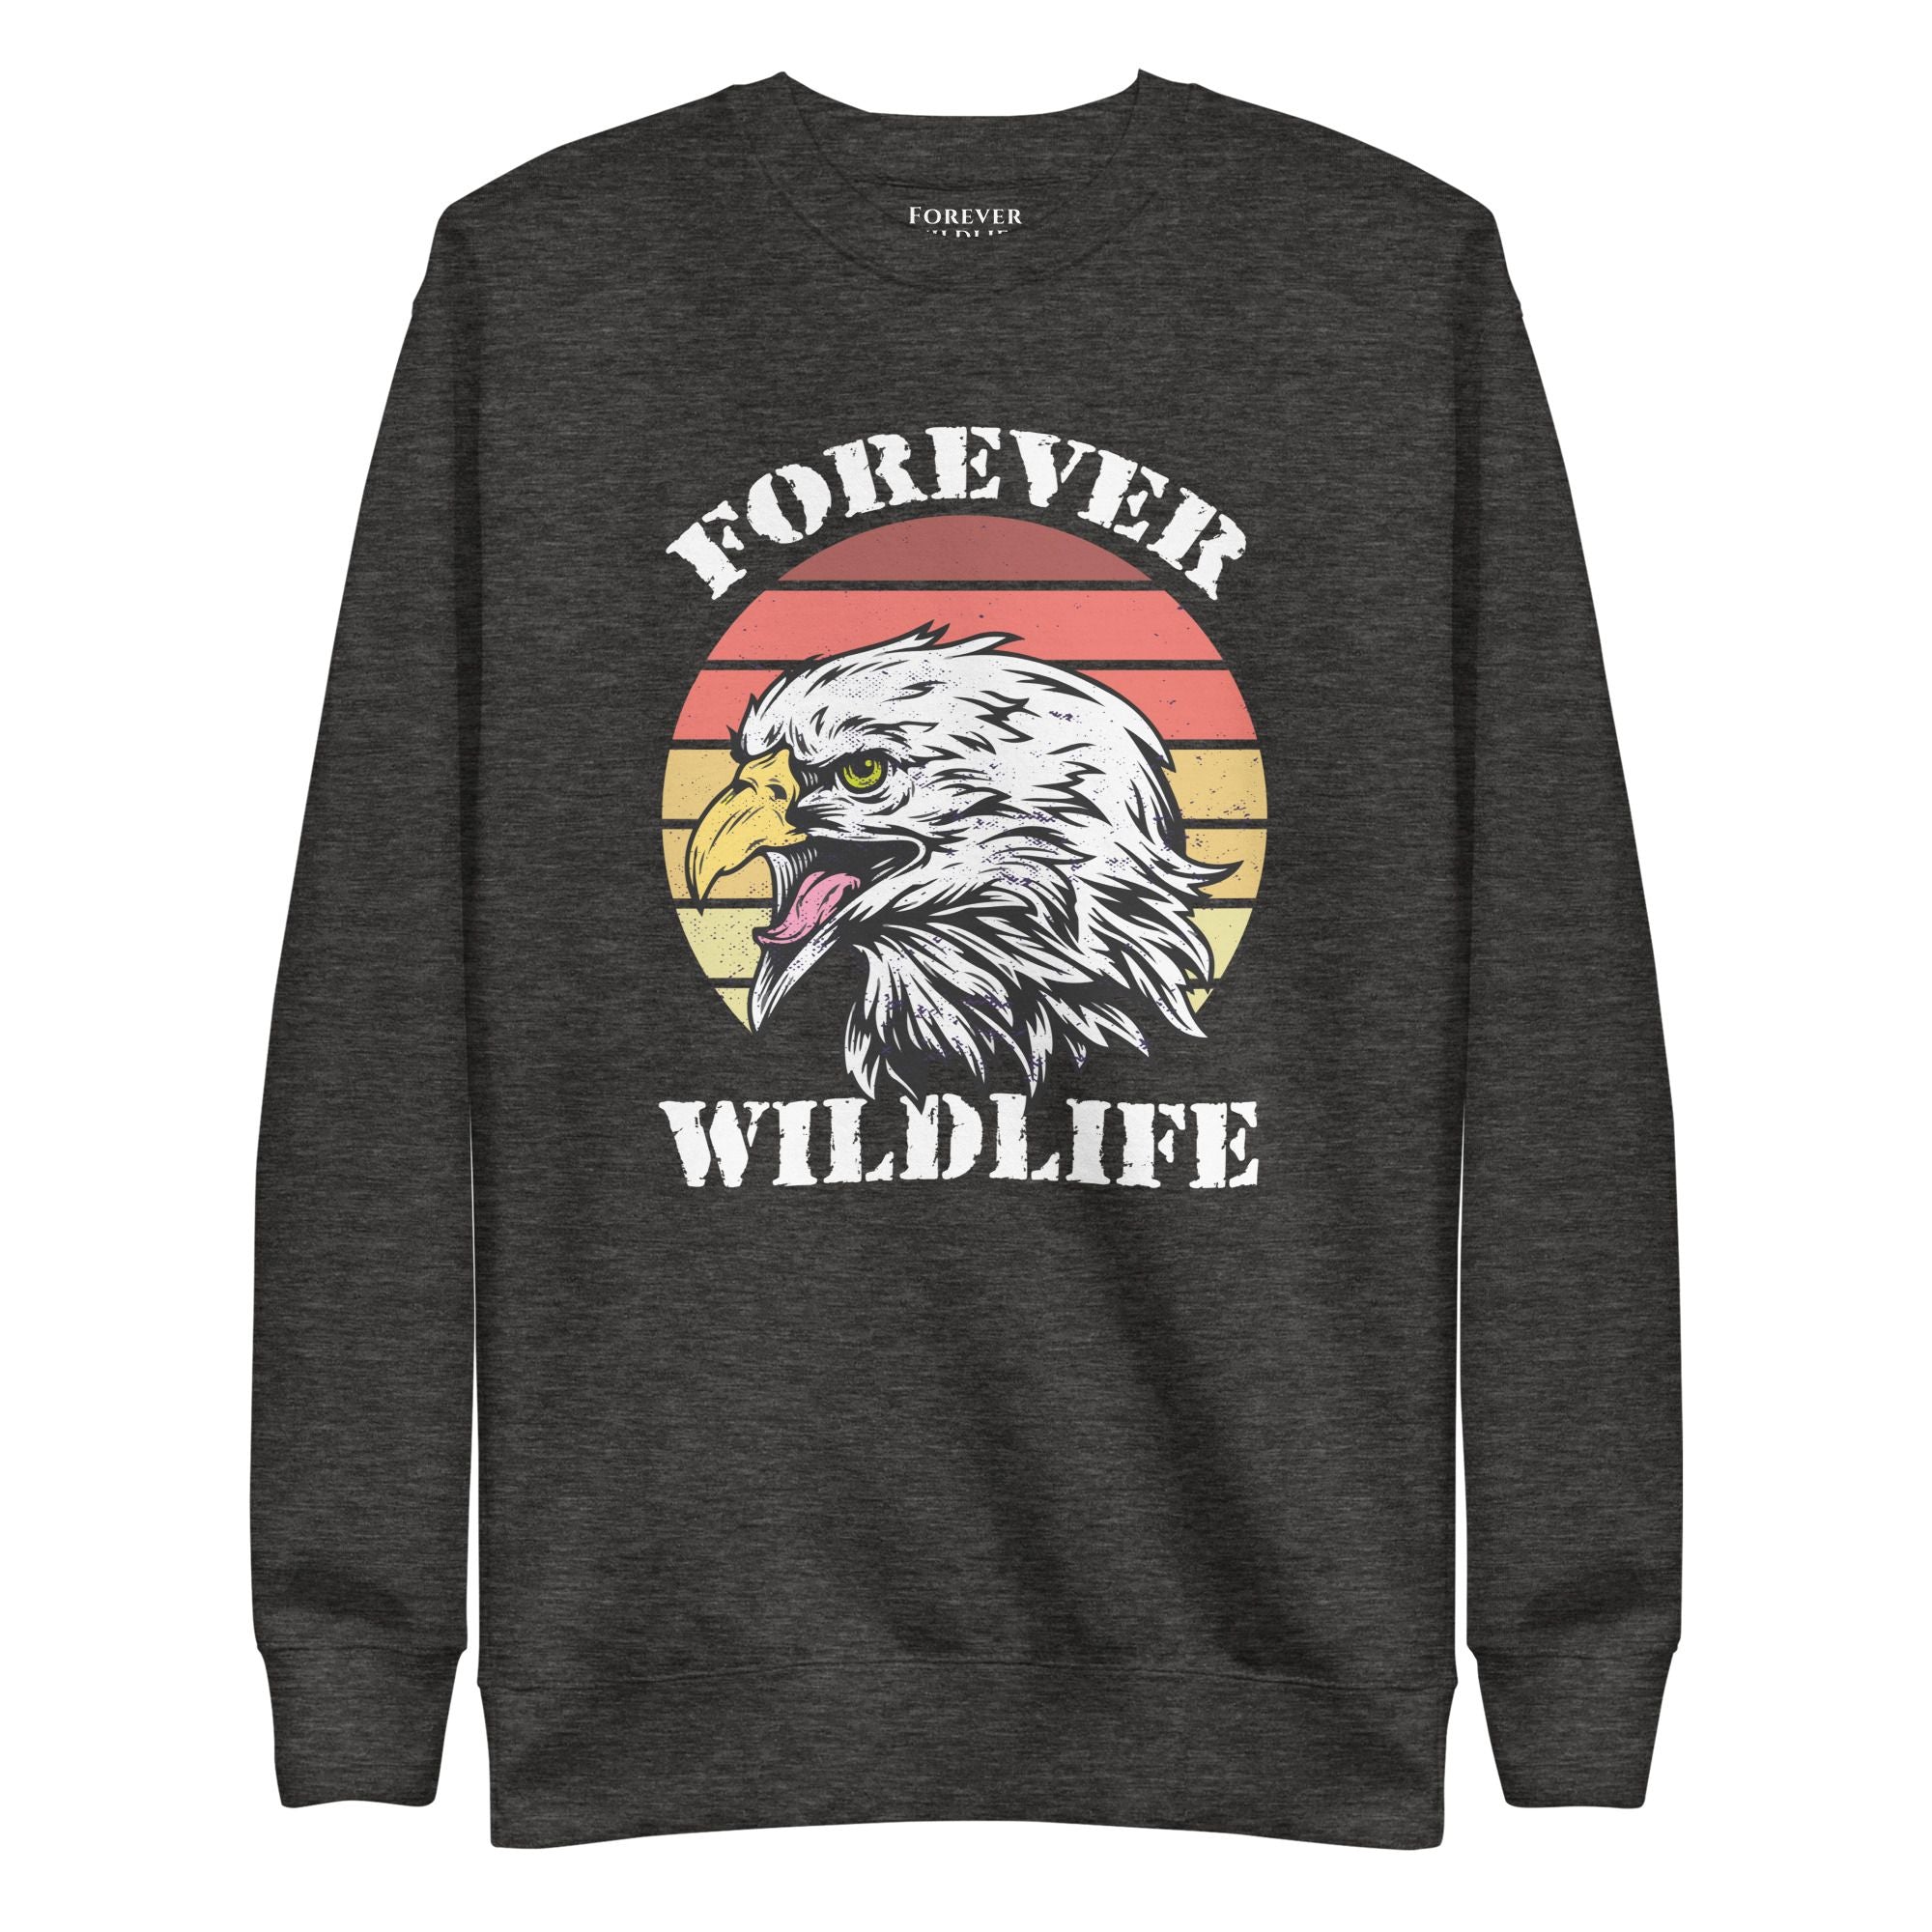 Eagle Sweatshirt in Heather Charcoal-Premium Wildlife Animal Inspiration Sweatshirt Design, part of Wildlife Sweatshirts & Clothing from Forever Wildlife.